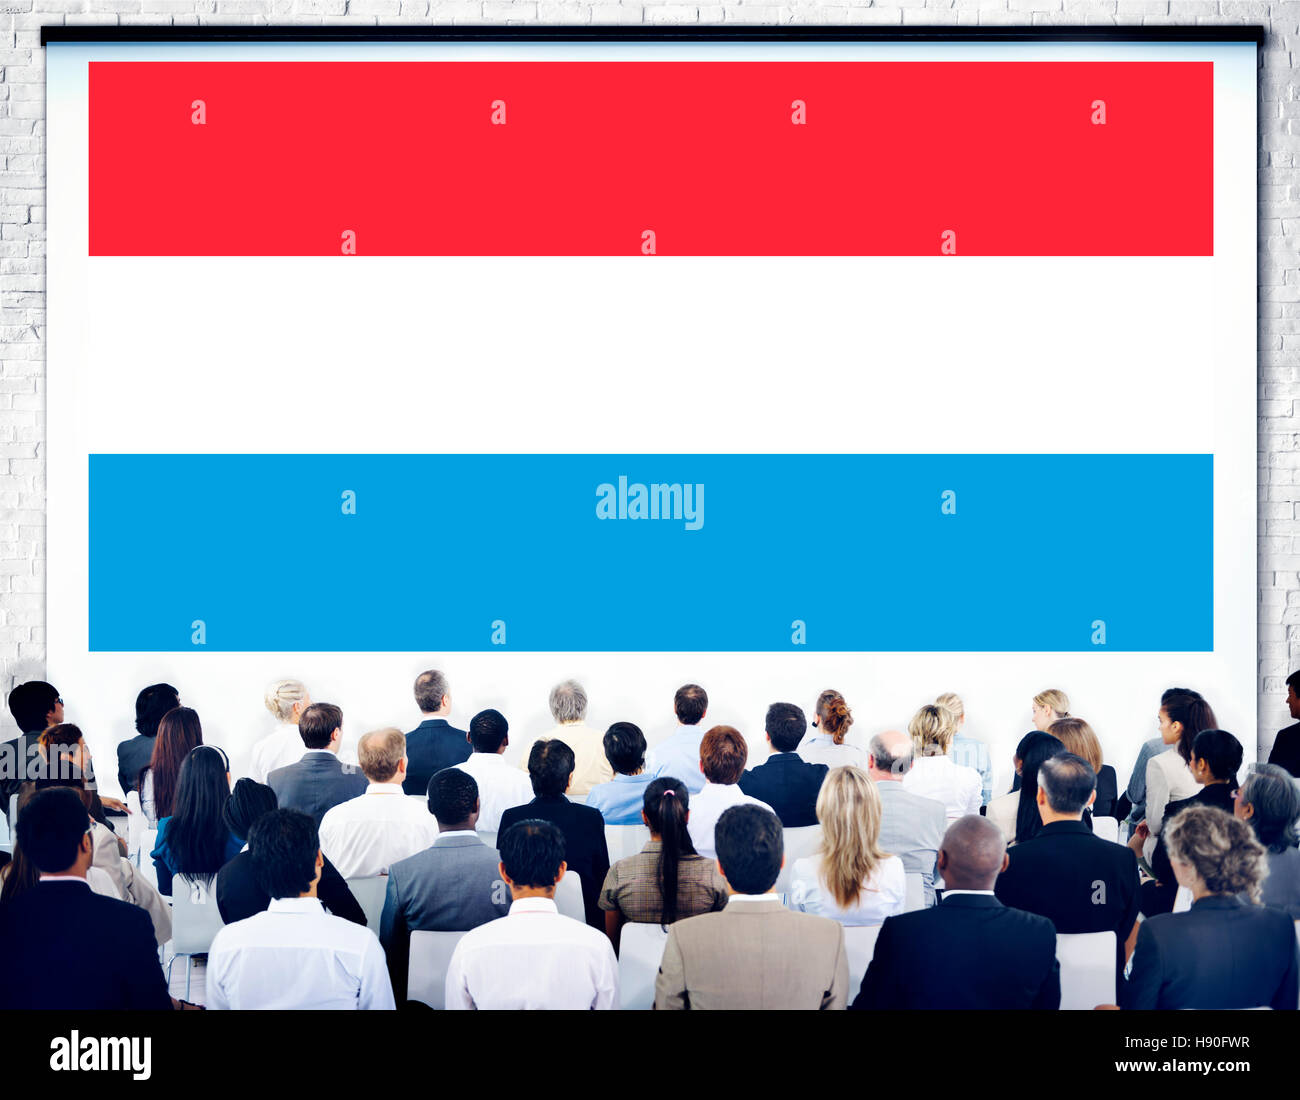 Luxemburgo Bandera Nacional Gobierno libertad libertad concepto Foto de stock